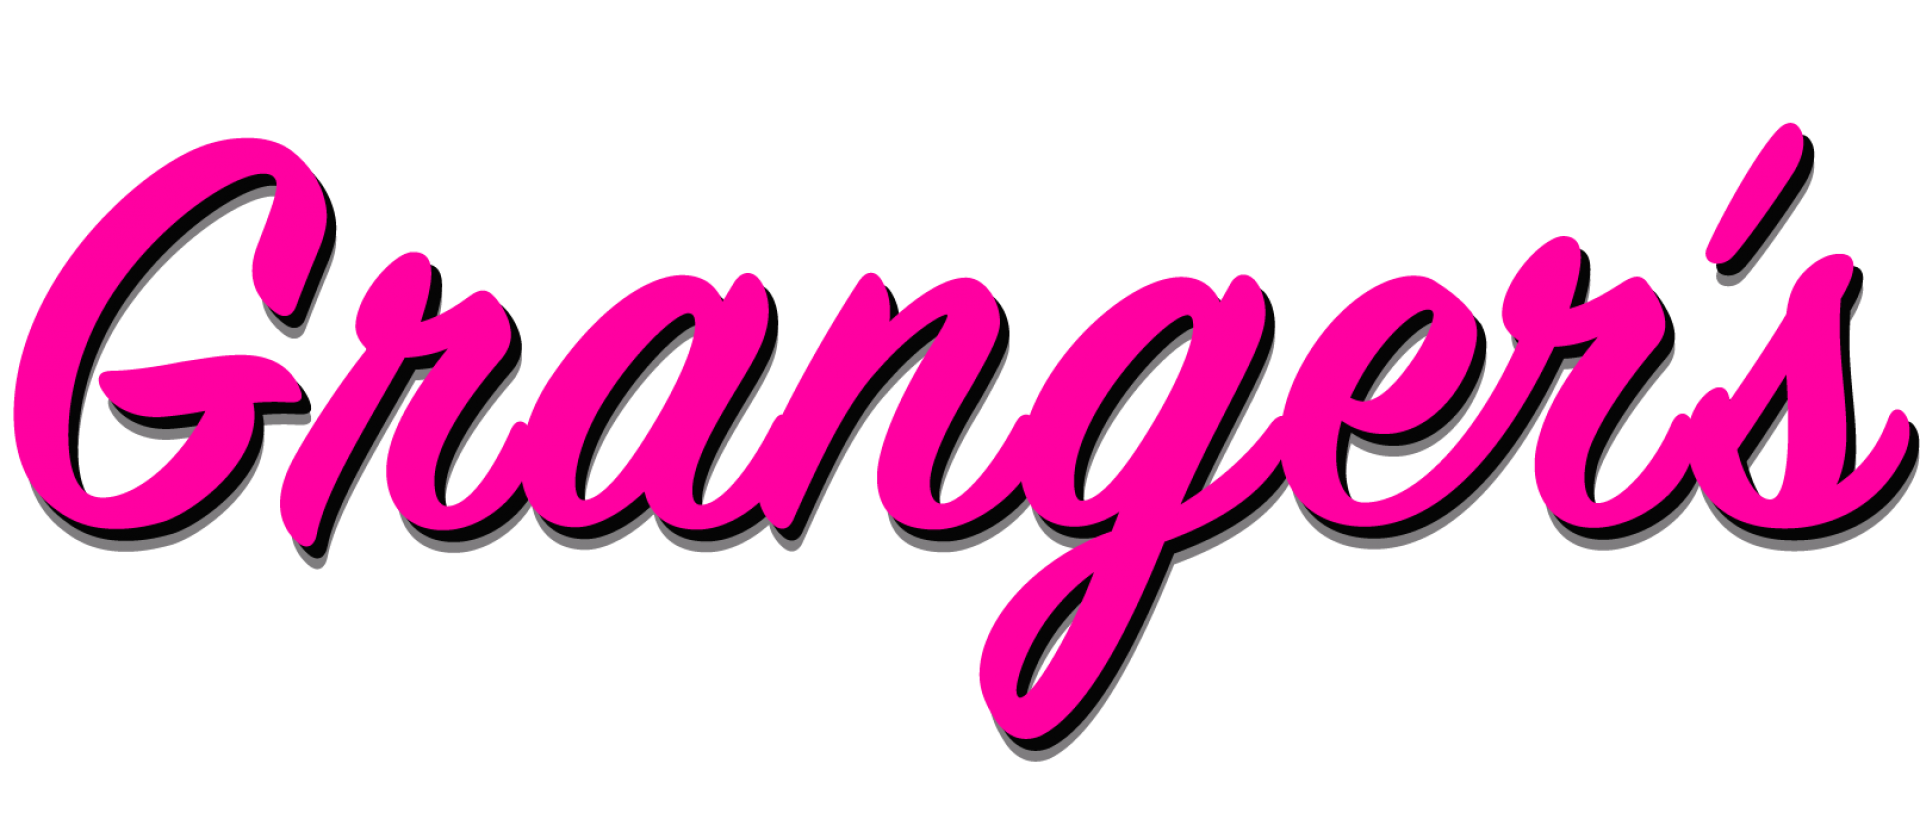 Granger's company logo